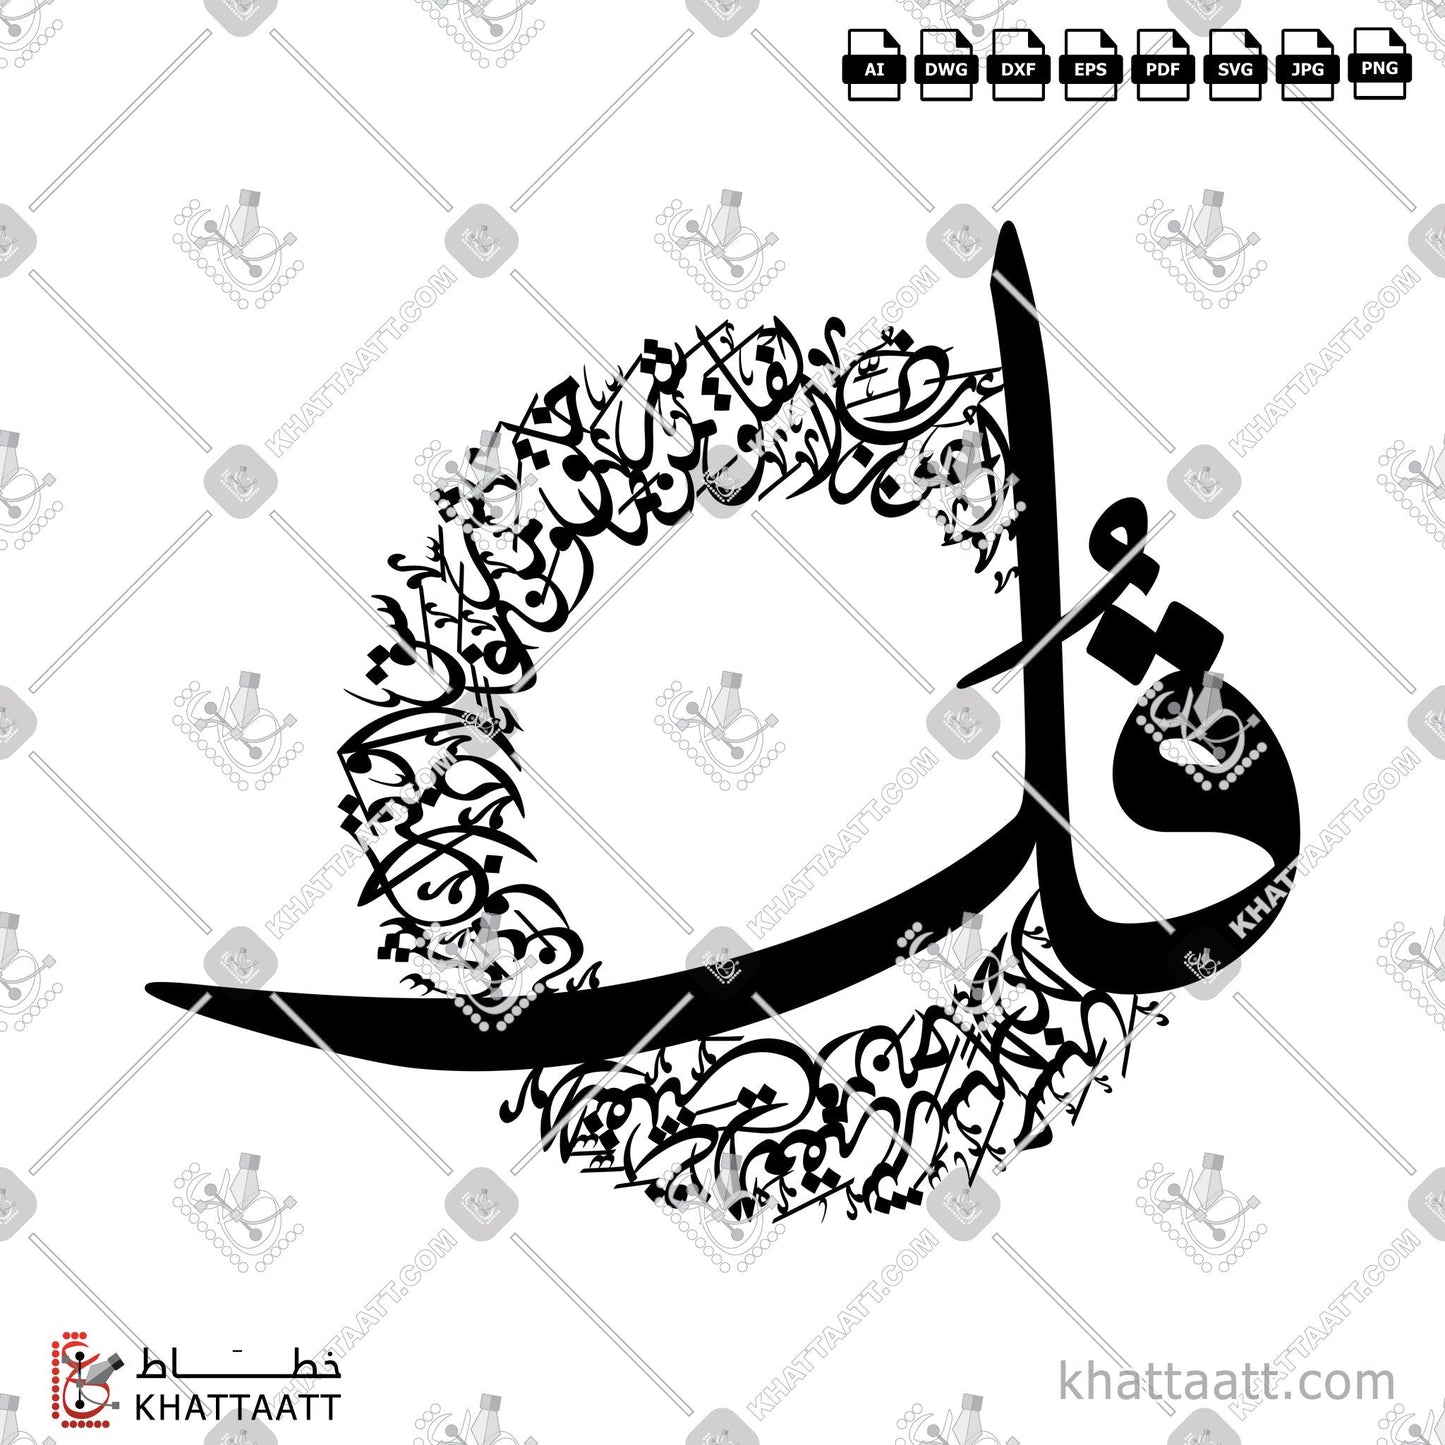 Download Arabic Calligraphy of Surat Al-Falaq - سورة الفلق in Diwani - الخط الديواني in vector and .png